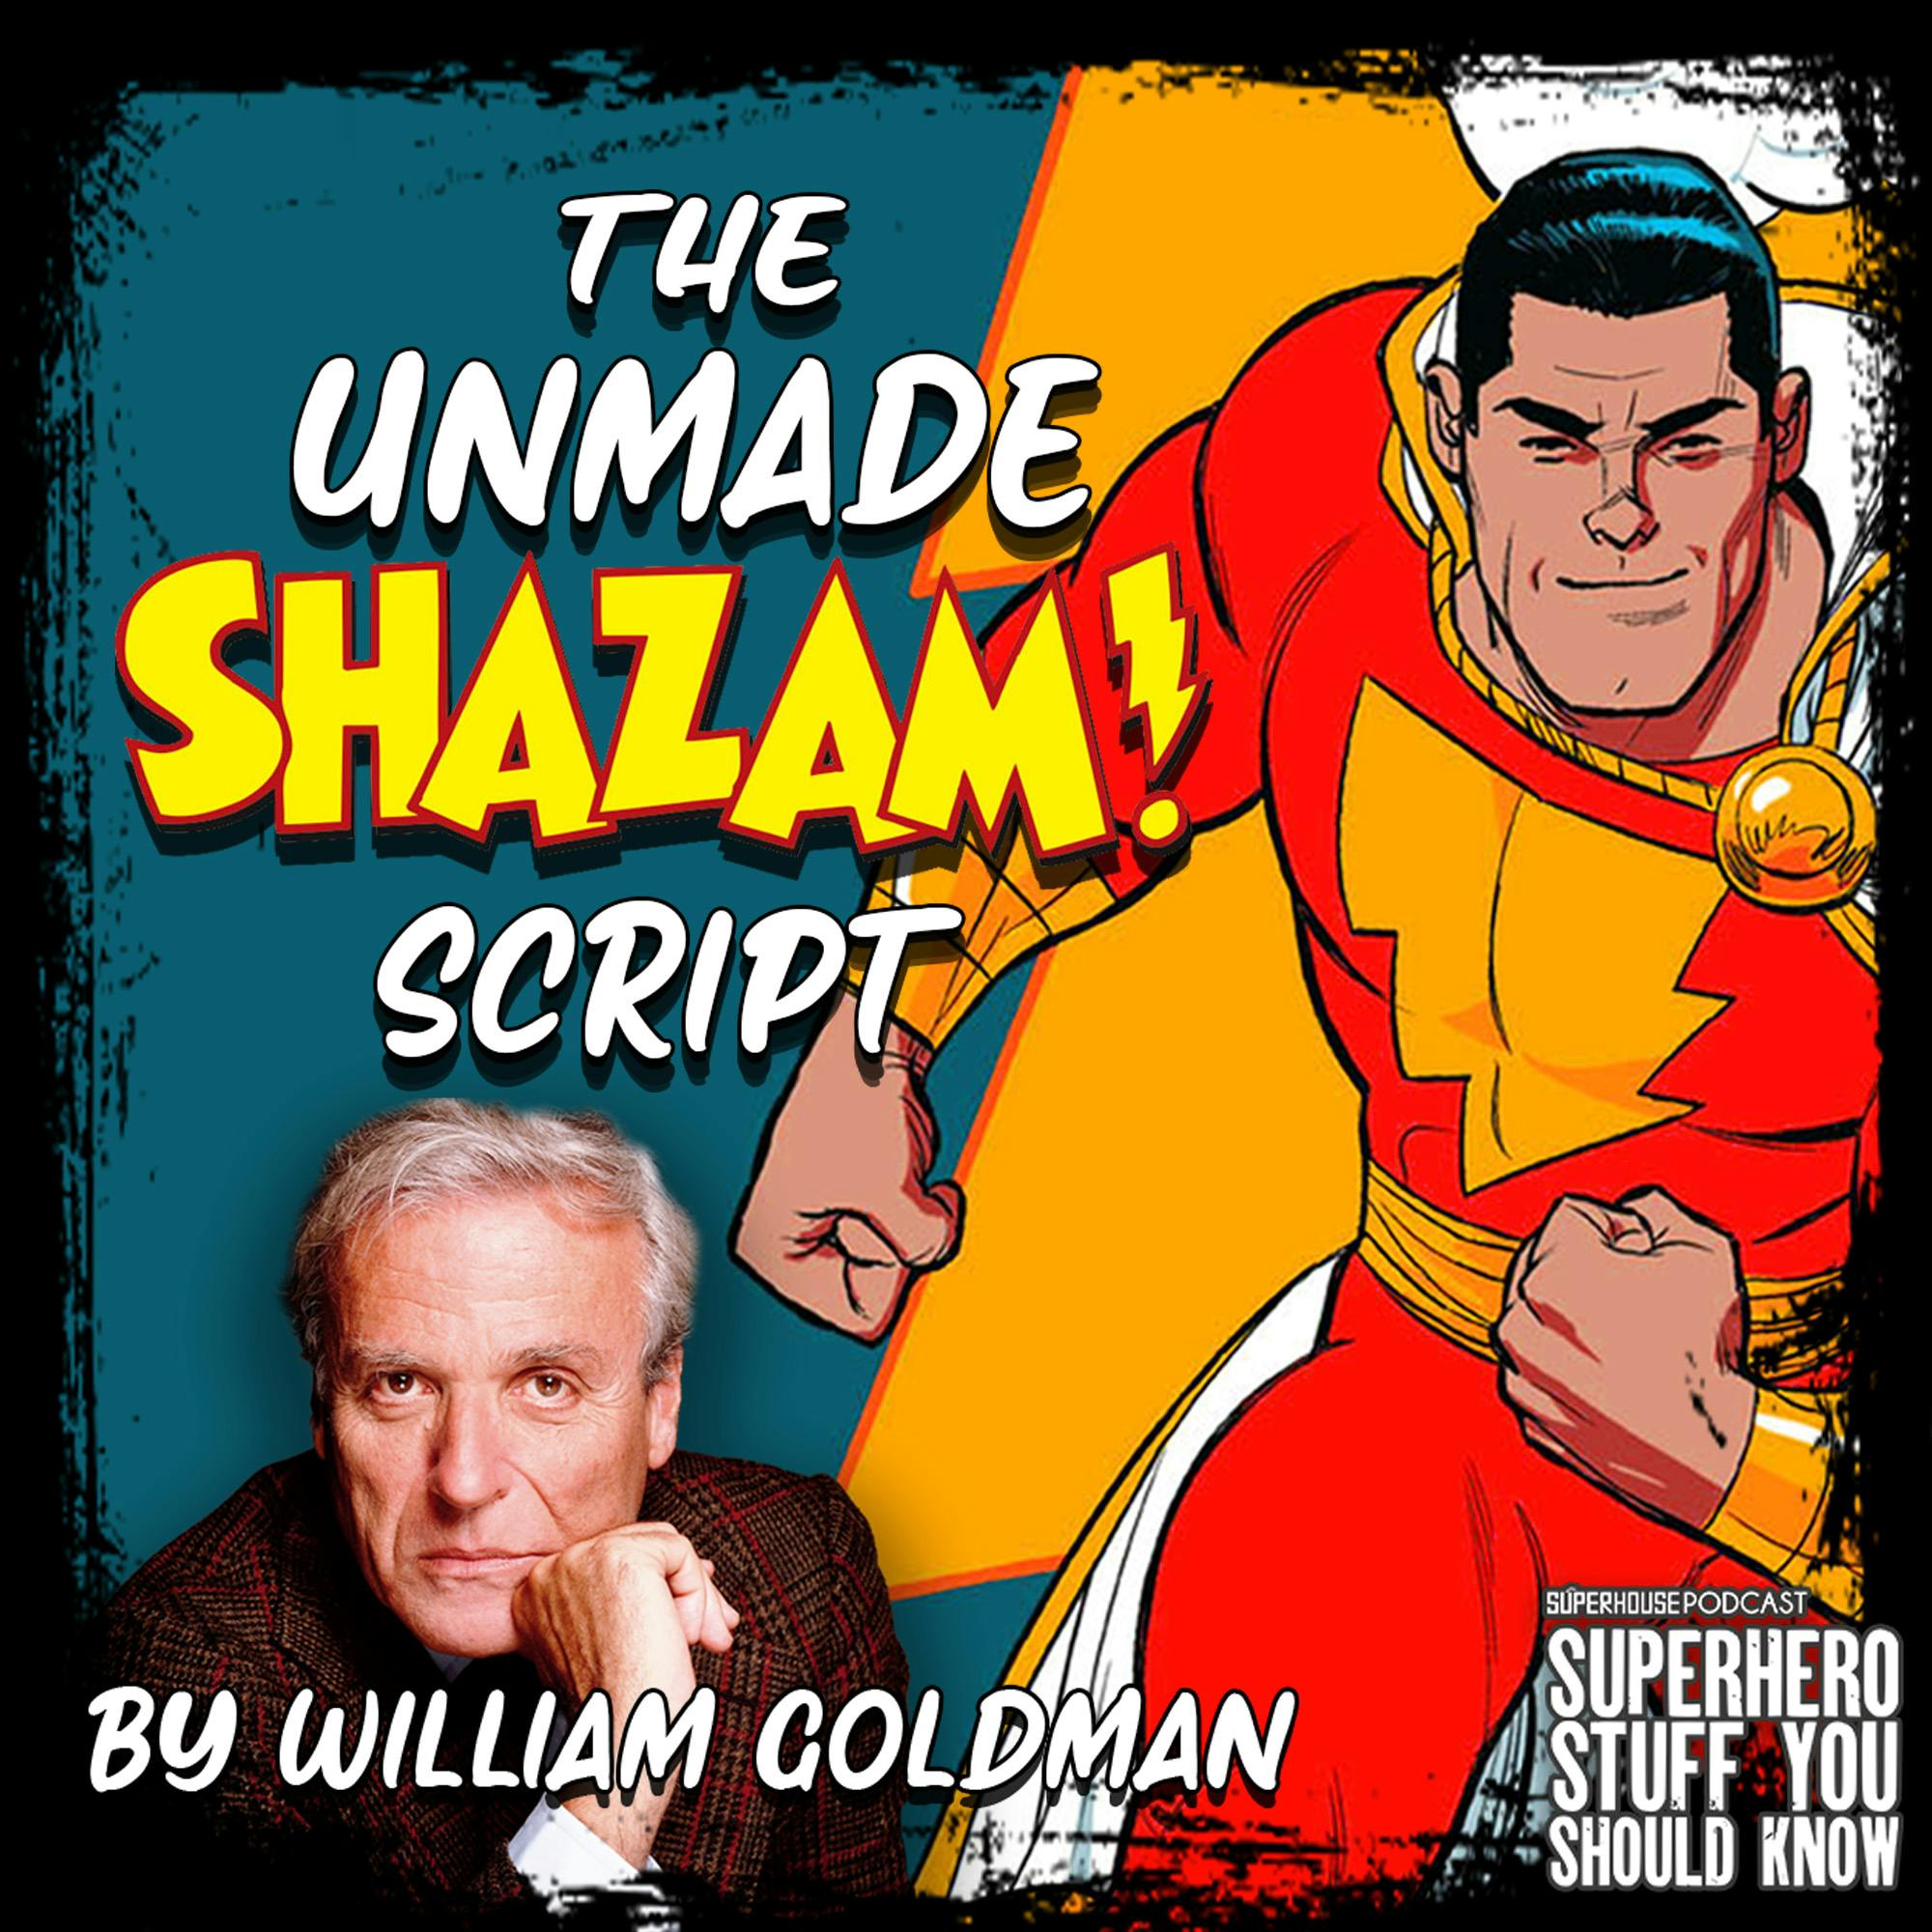 The Unmade Shazam Script By William Goldman